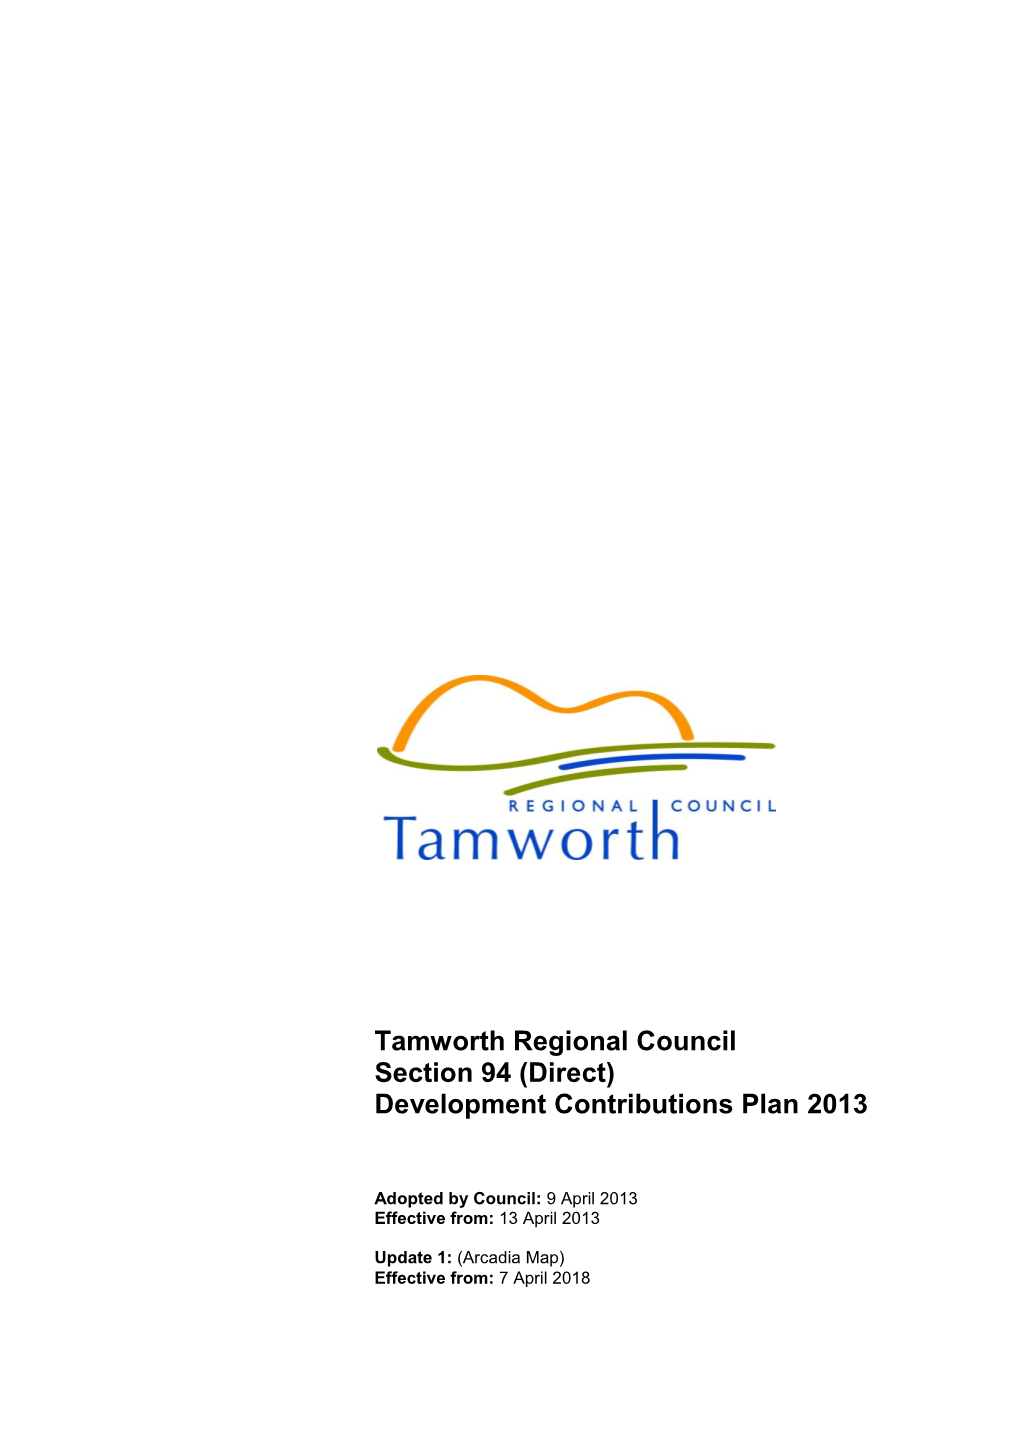 Tamworth Regional Council Section 94 (Direct) Development Contributions Plan 2013